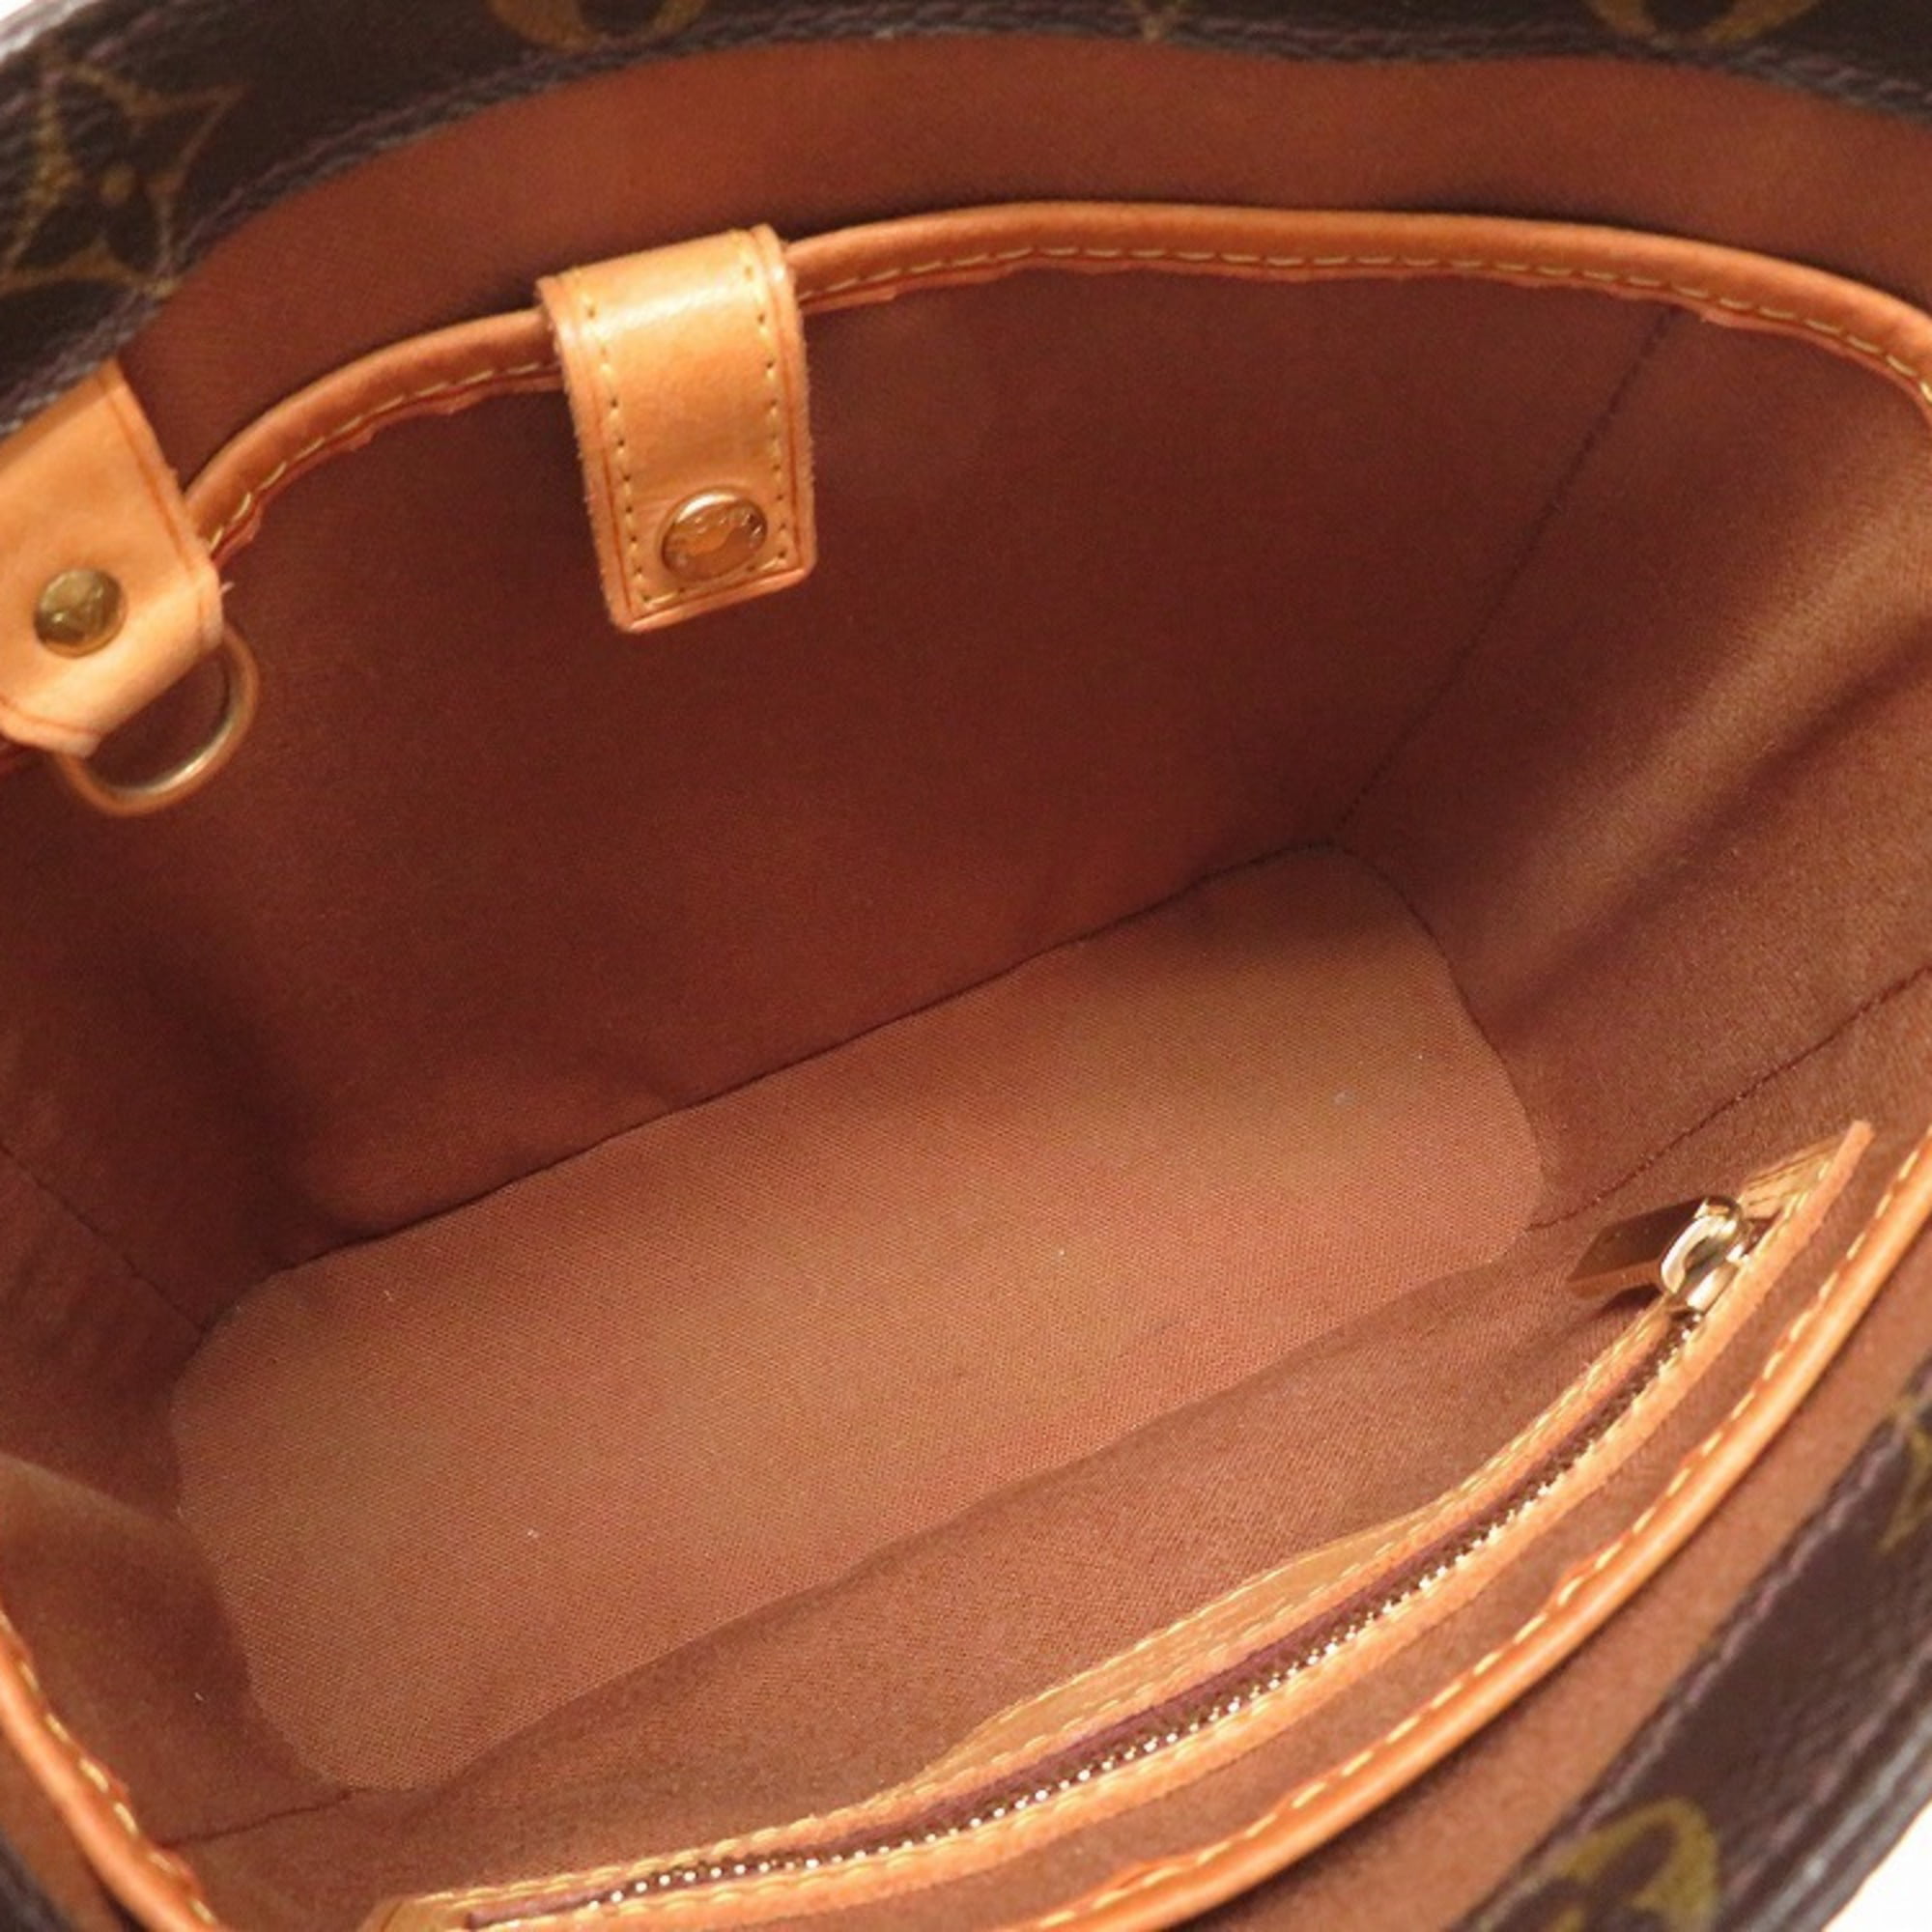 LOUIS VUITTON LV Vavin PM Used Tote Handbag Monogram Leather M51172 #AH63 S